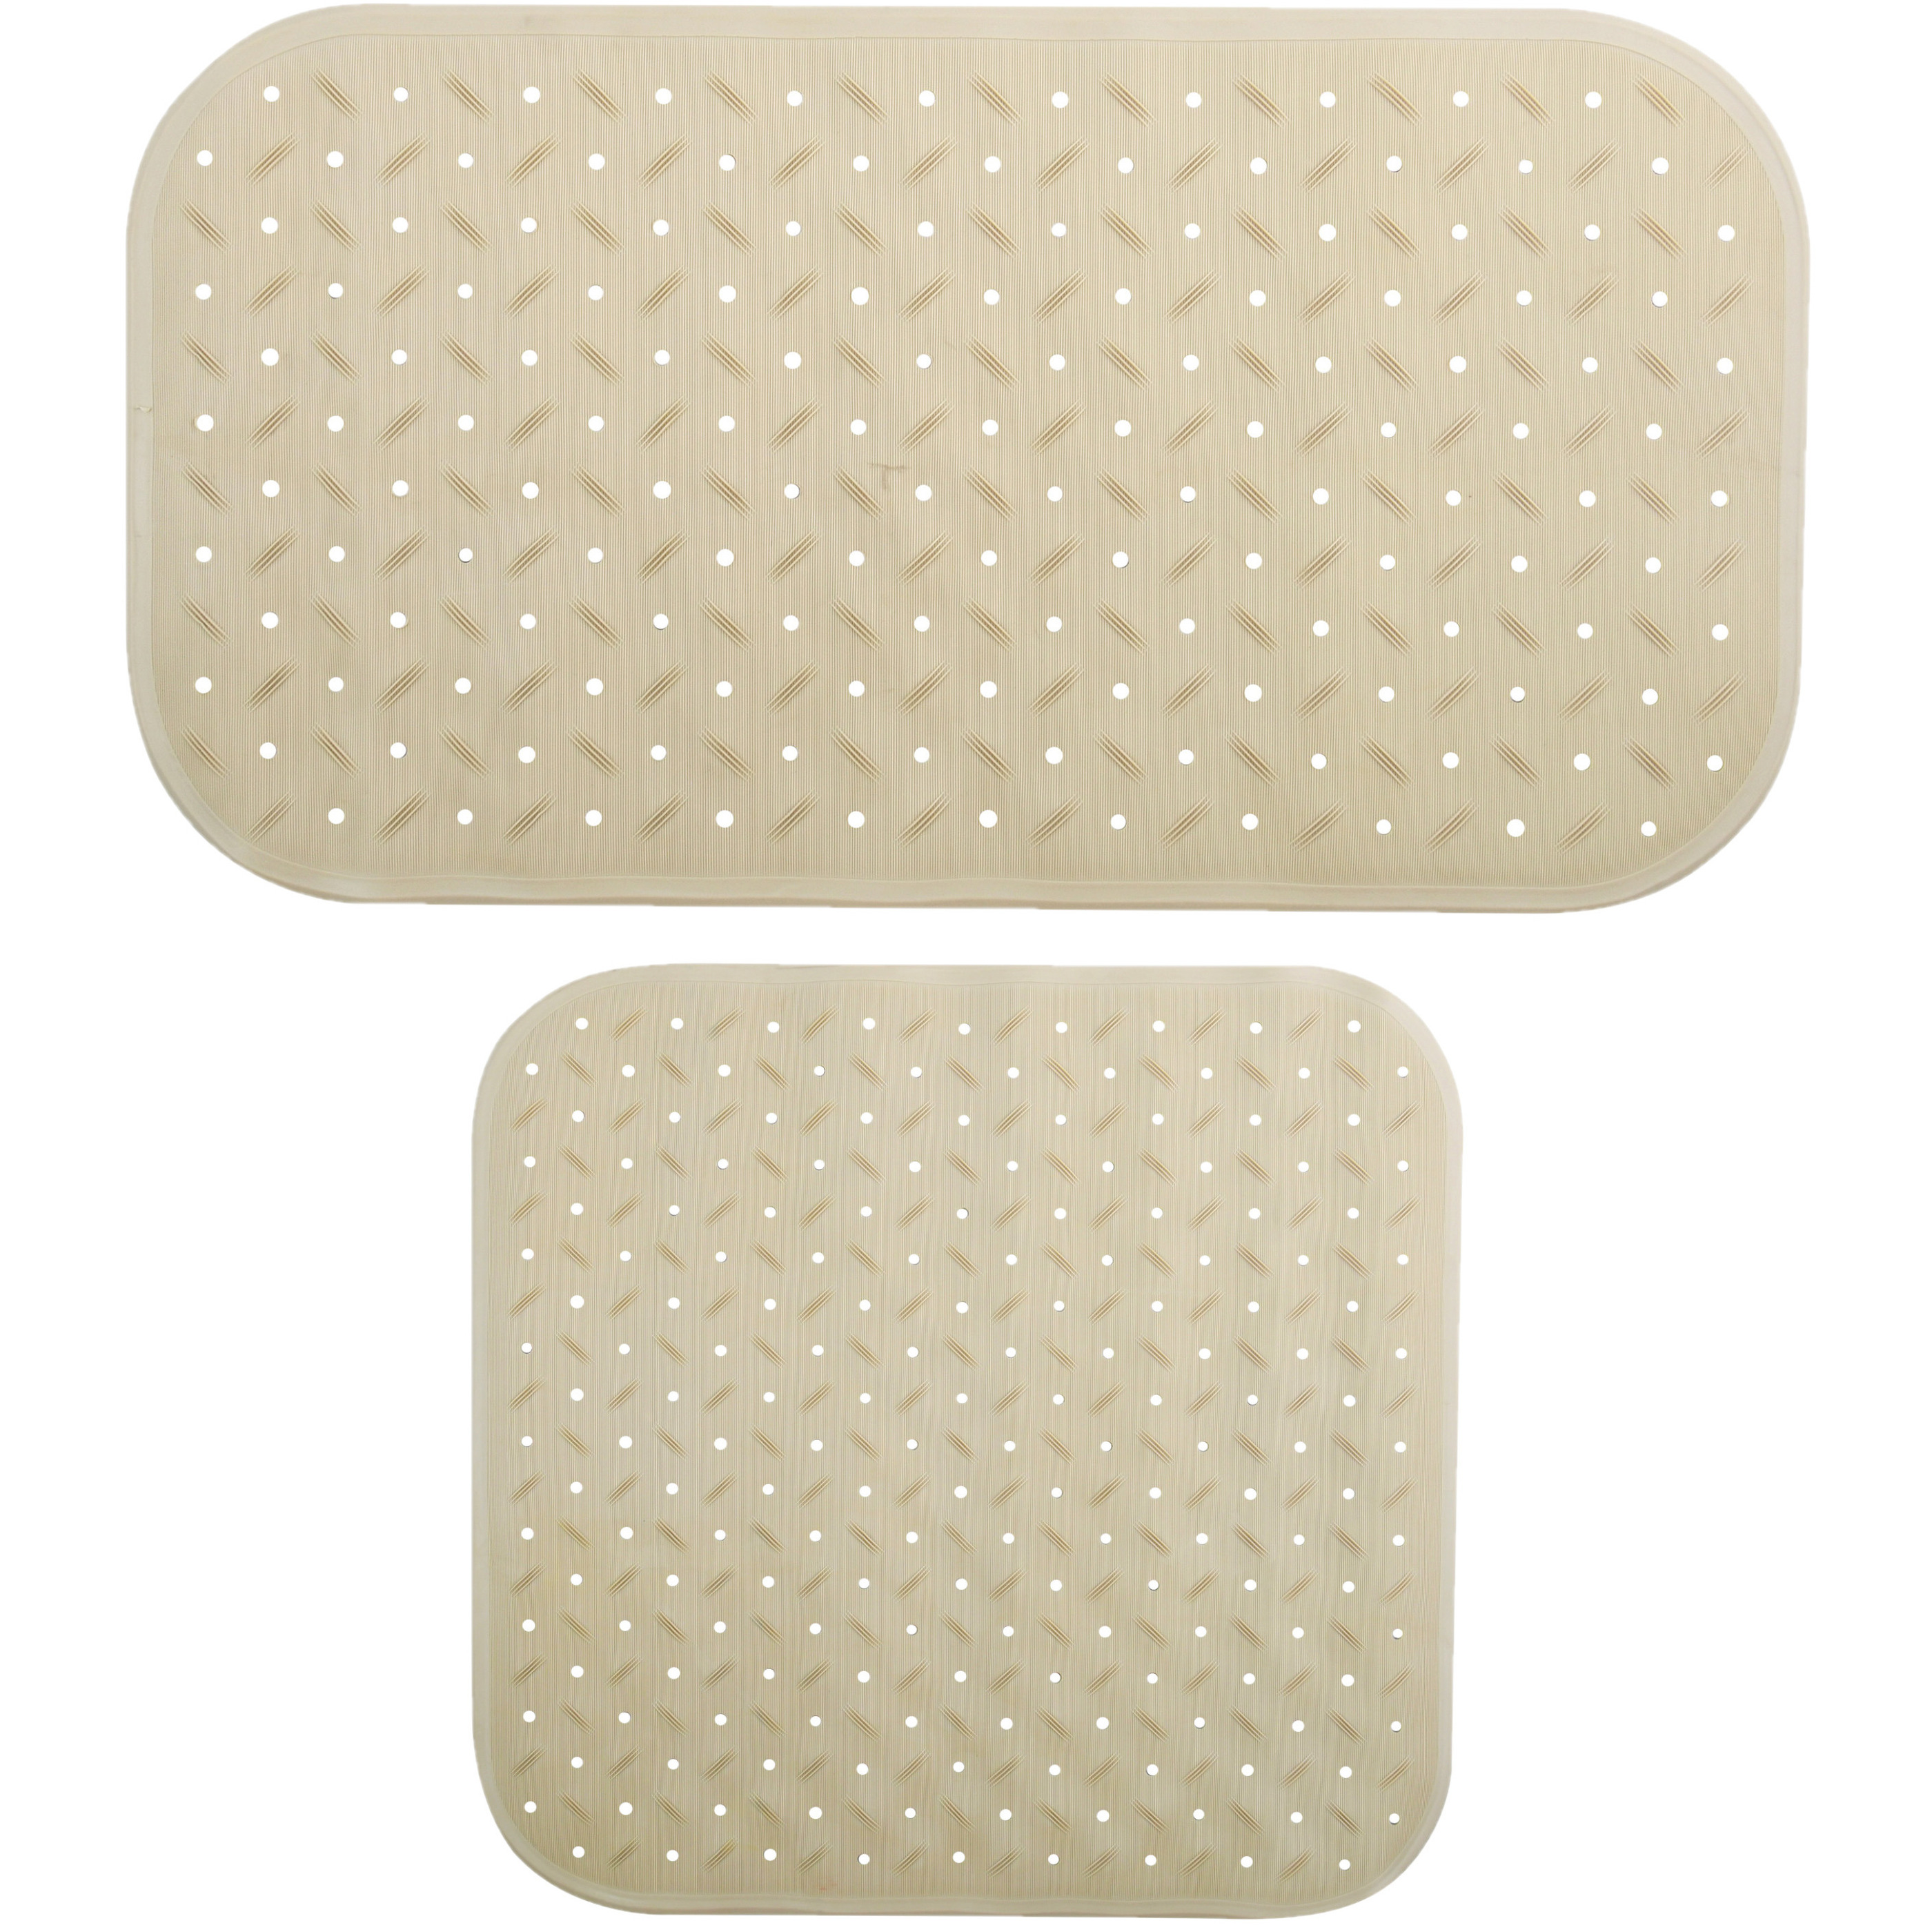 MSV Douche-bad anti-slip matten set badkamer rubber 2x stuks beige 2 formaten